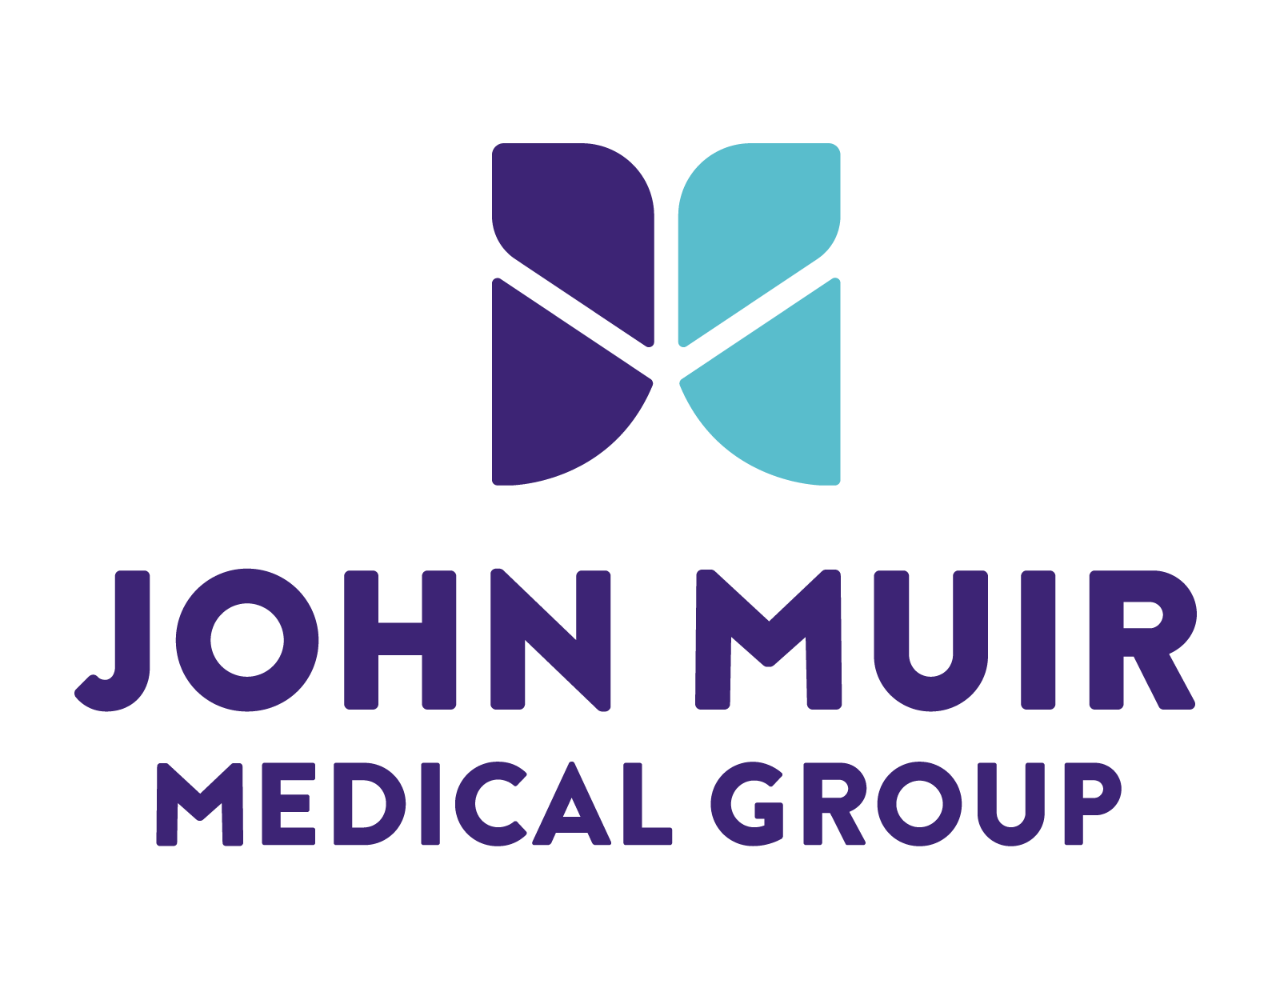 John muir medical group